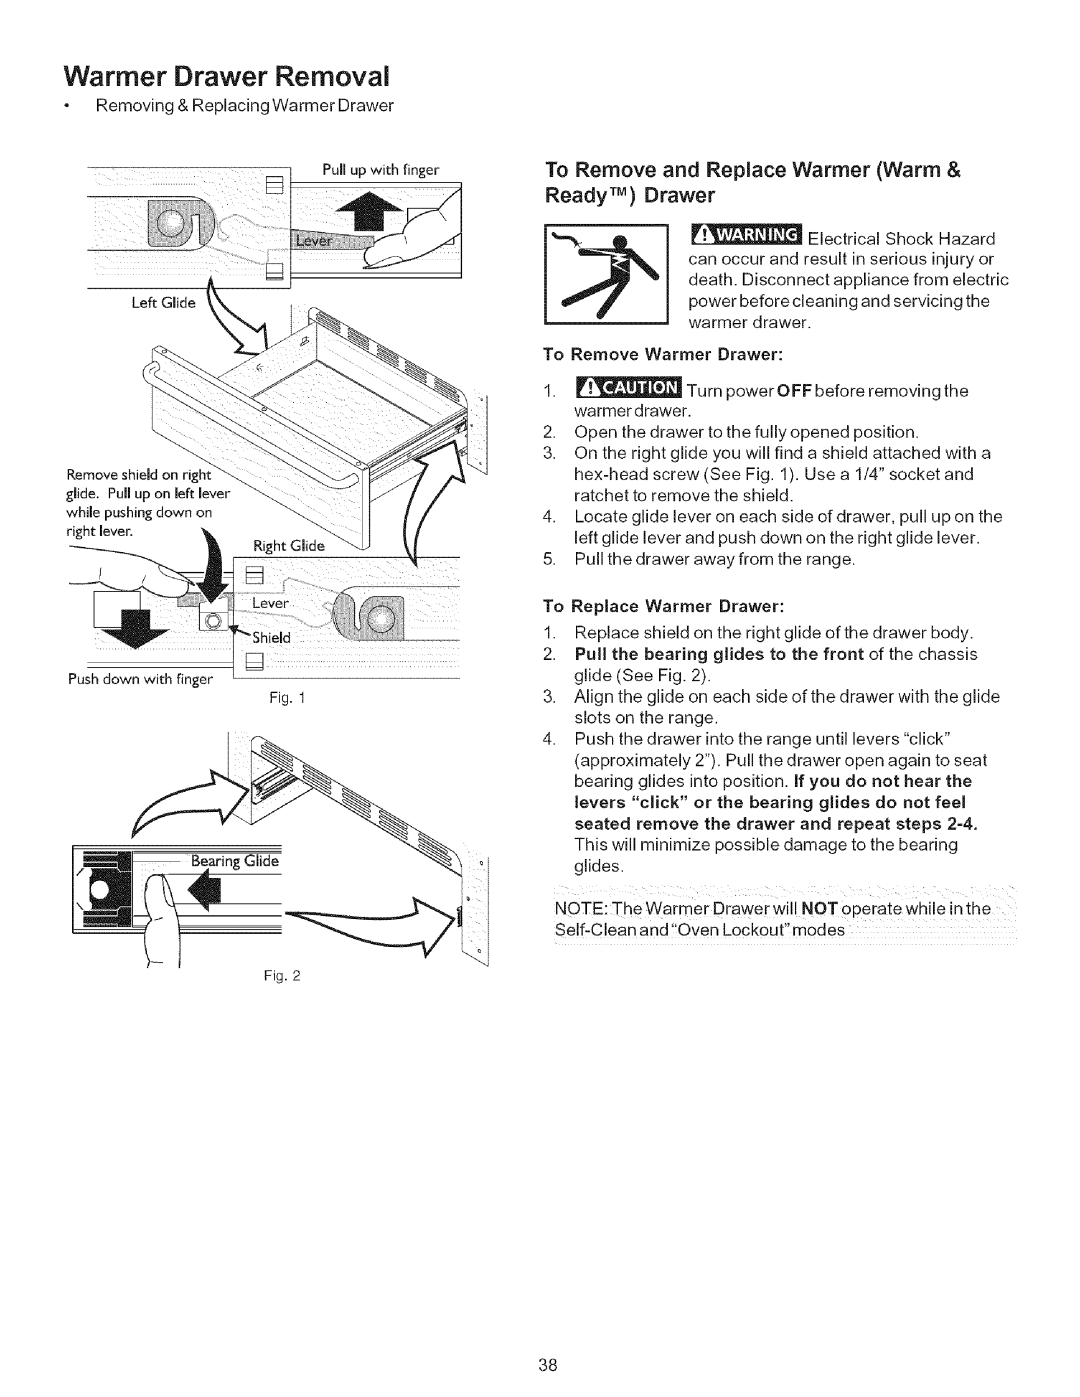 Kenmore 9664, 790-.9663 manual Warmer Drawer Removal, Ready TM Drawer 